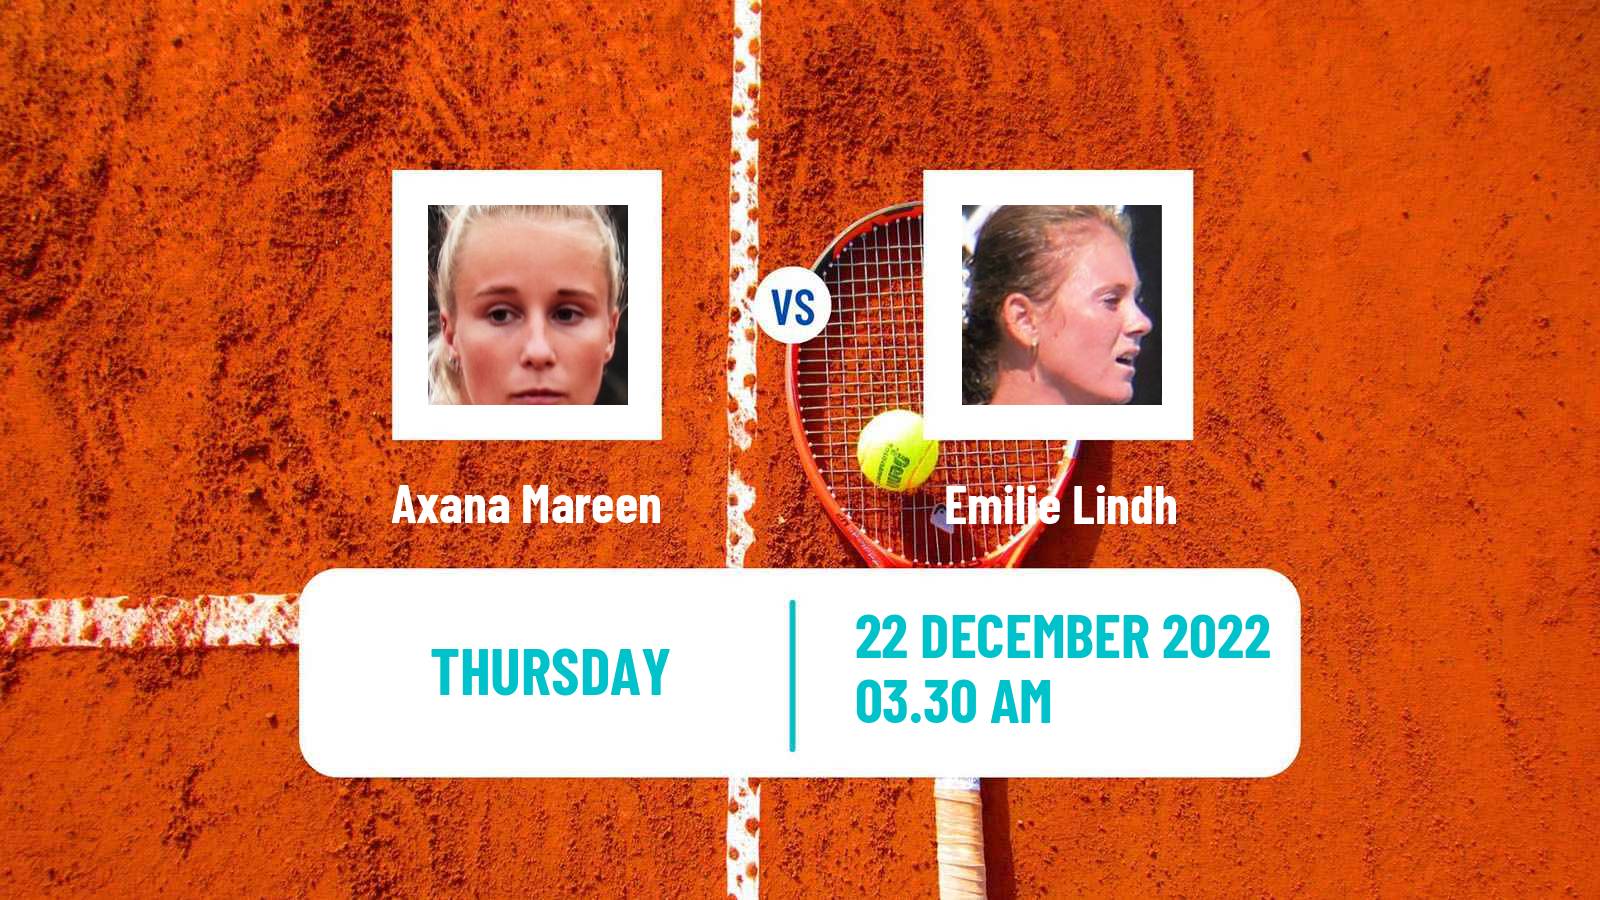 Tennis ITF Tournaments Axana Mareen - Emilie Lindh